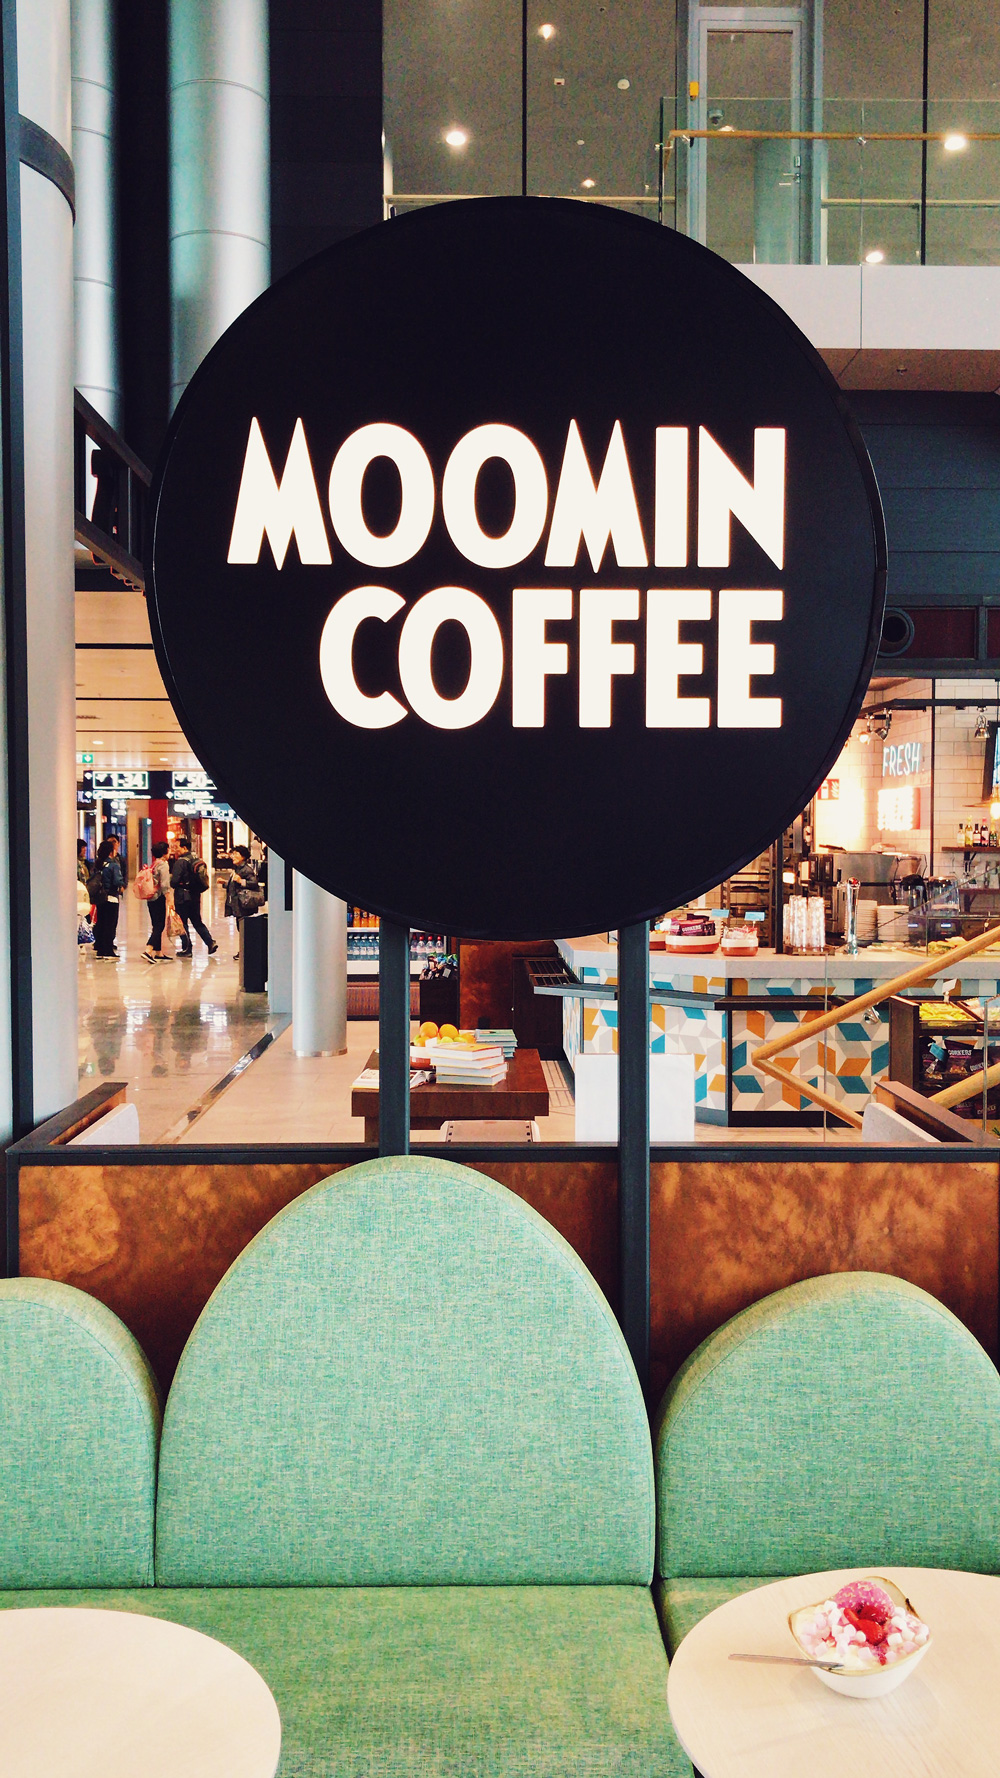 Moomin airport café